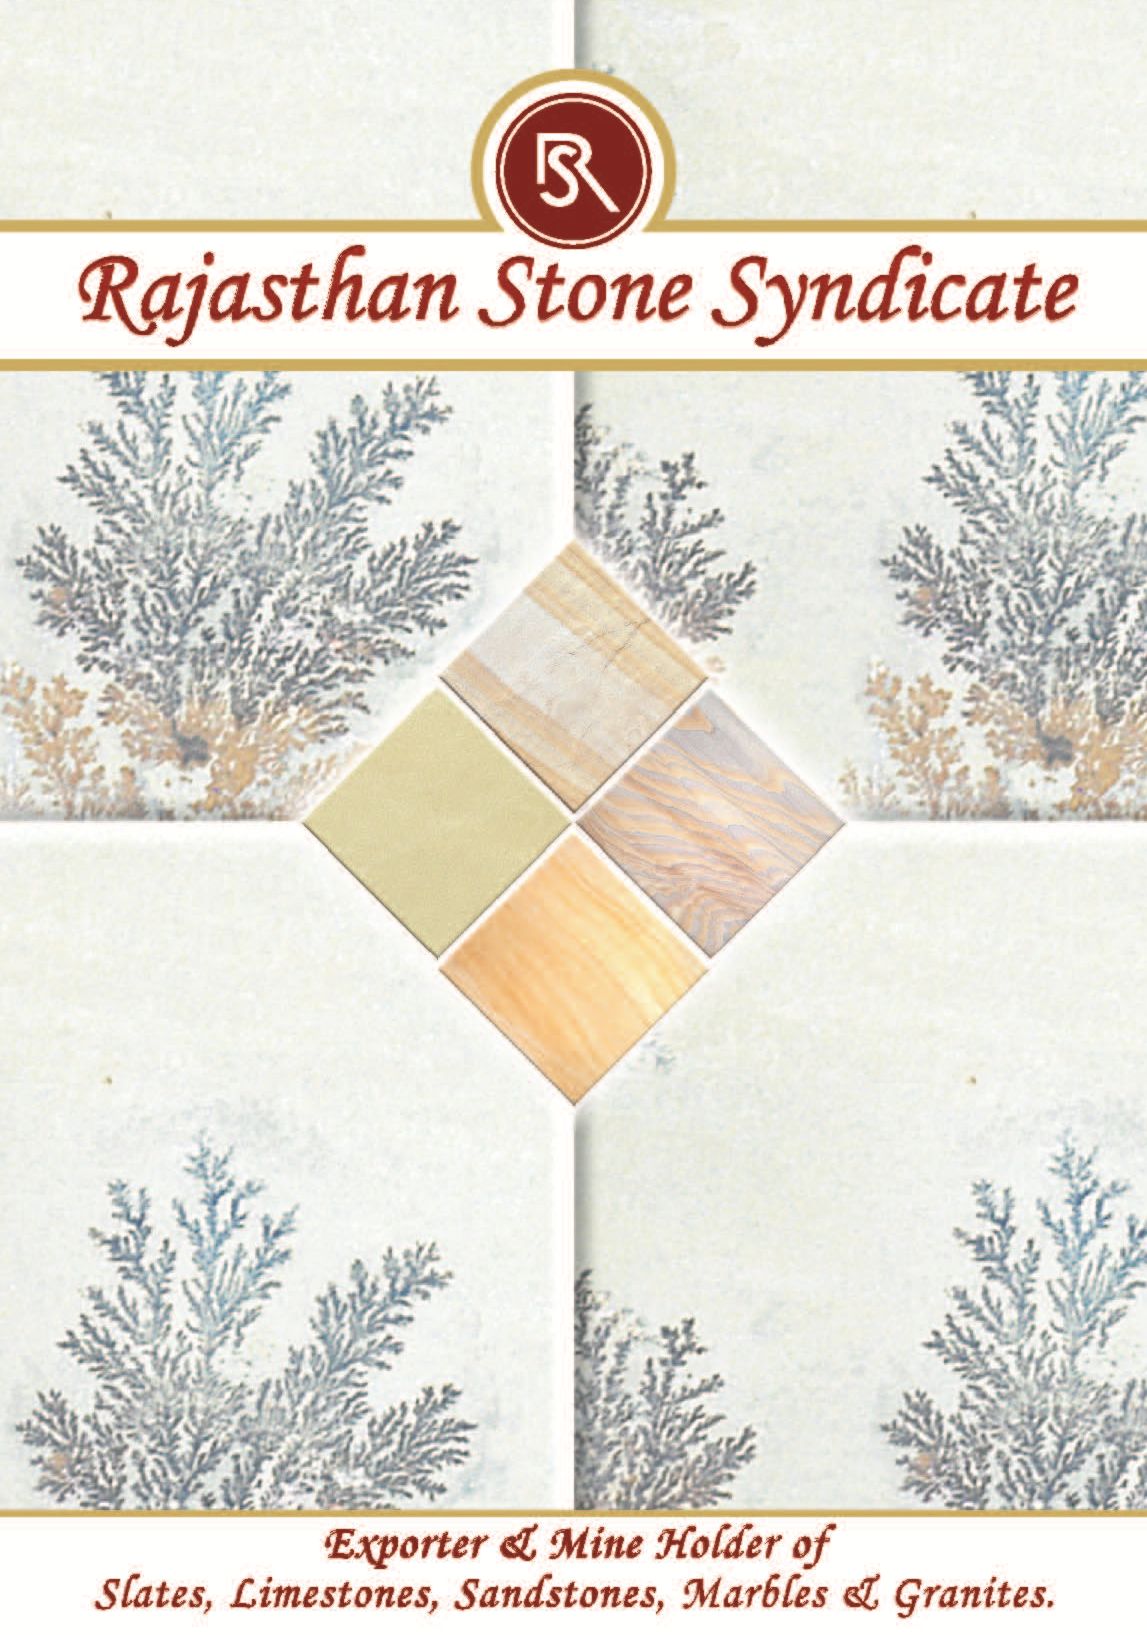 Rajasthan Stone Syndicate